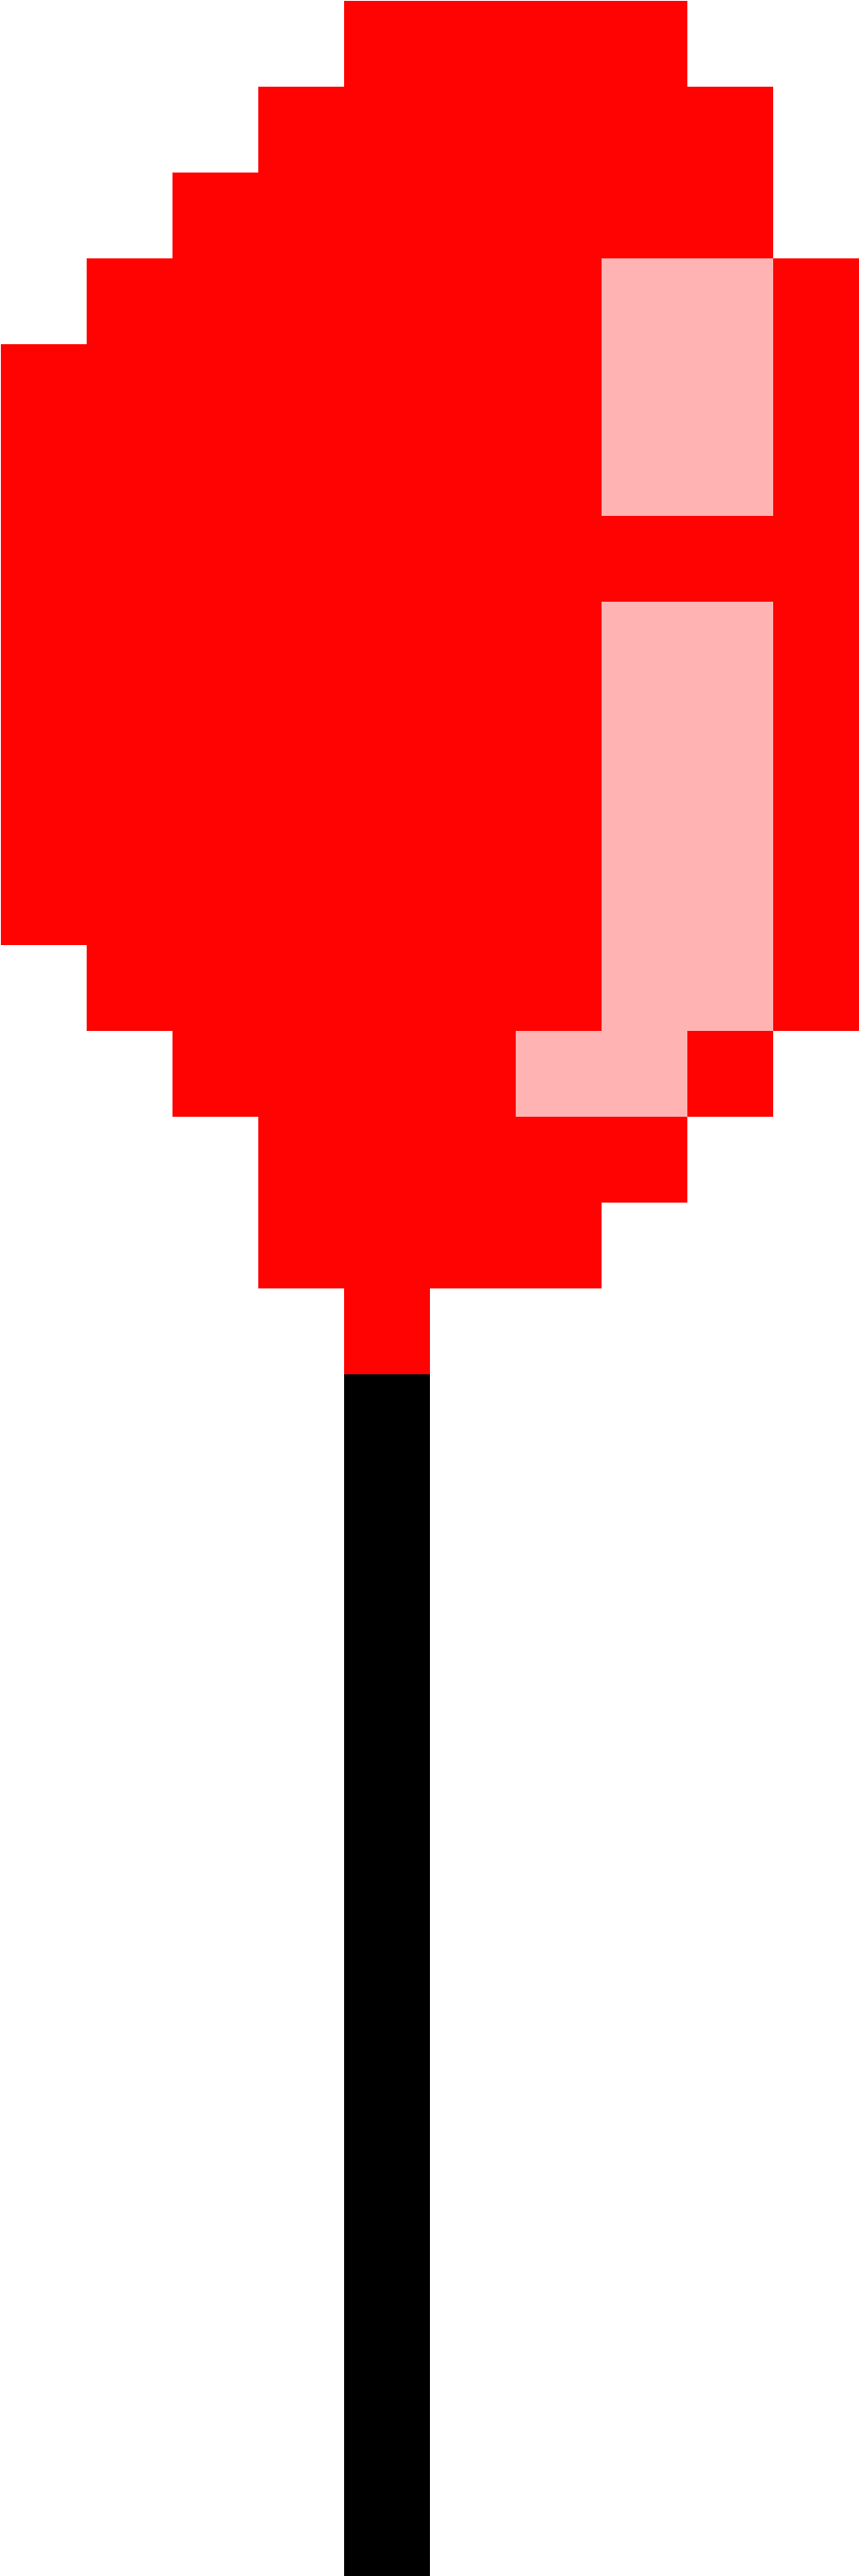 Red Balloon - Red Balloon Pixel (1300x3100)